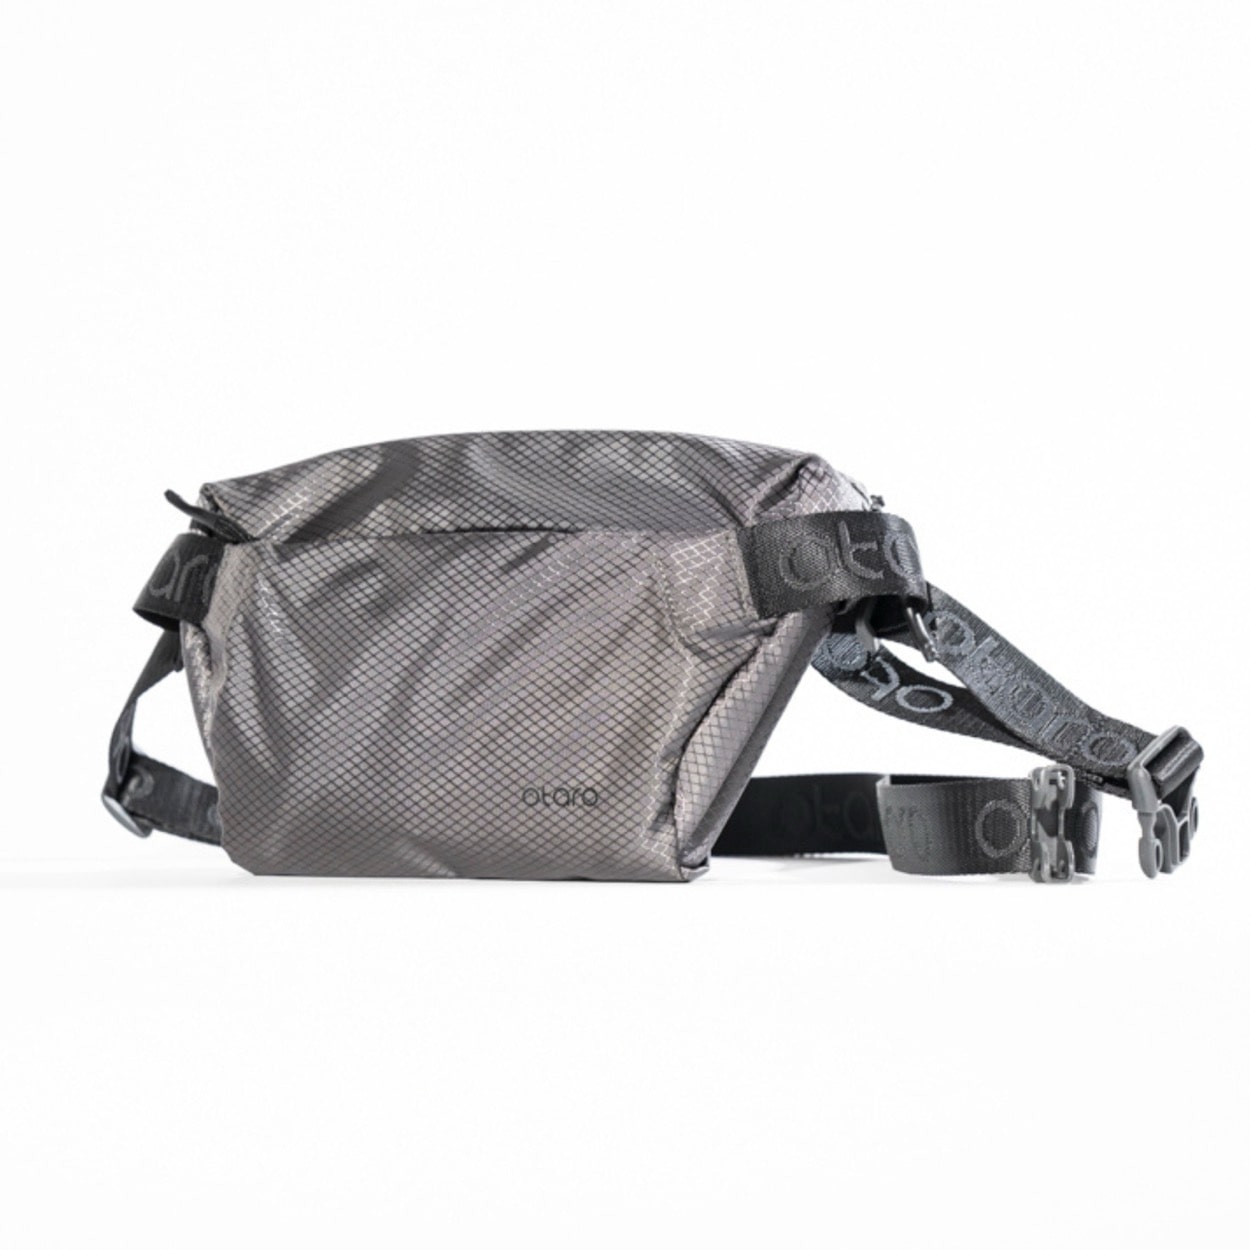 01ski-sling-bag-bauchtasche-zum-skifahrenjpg.jpg